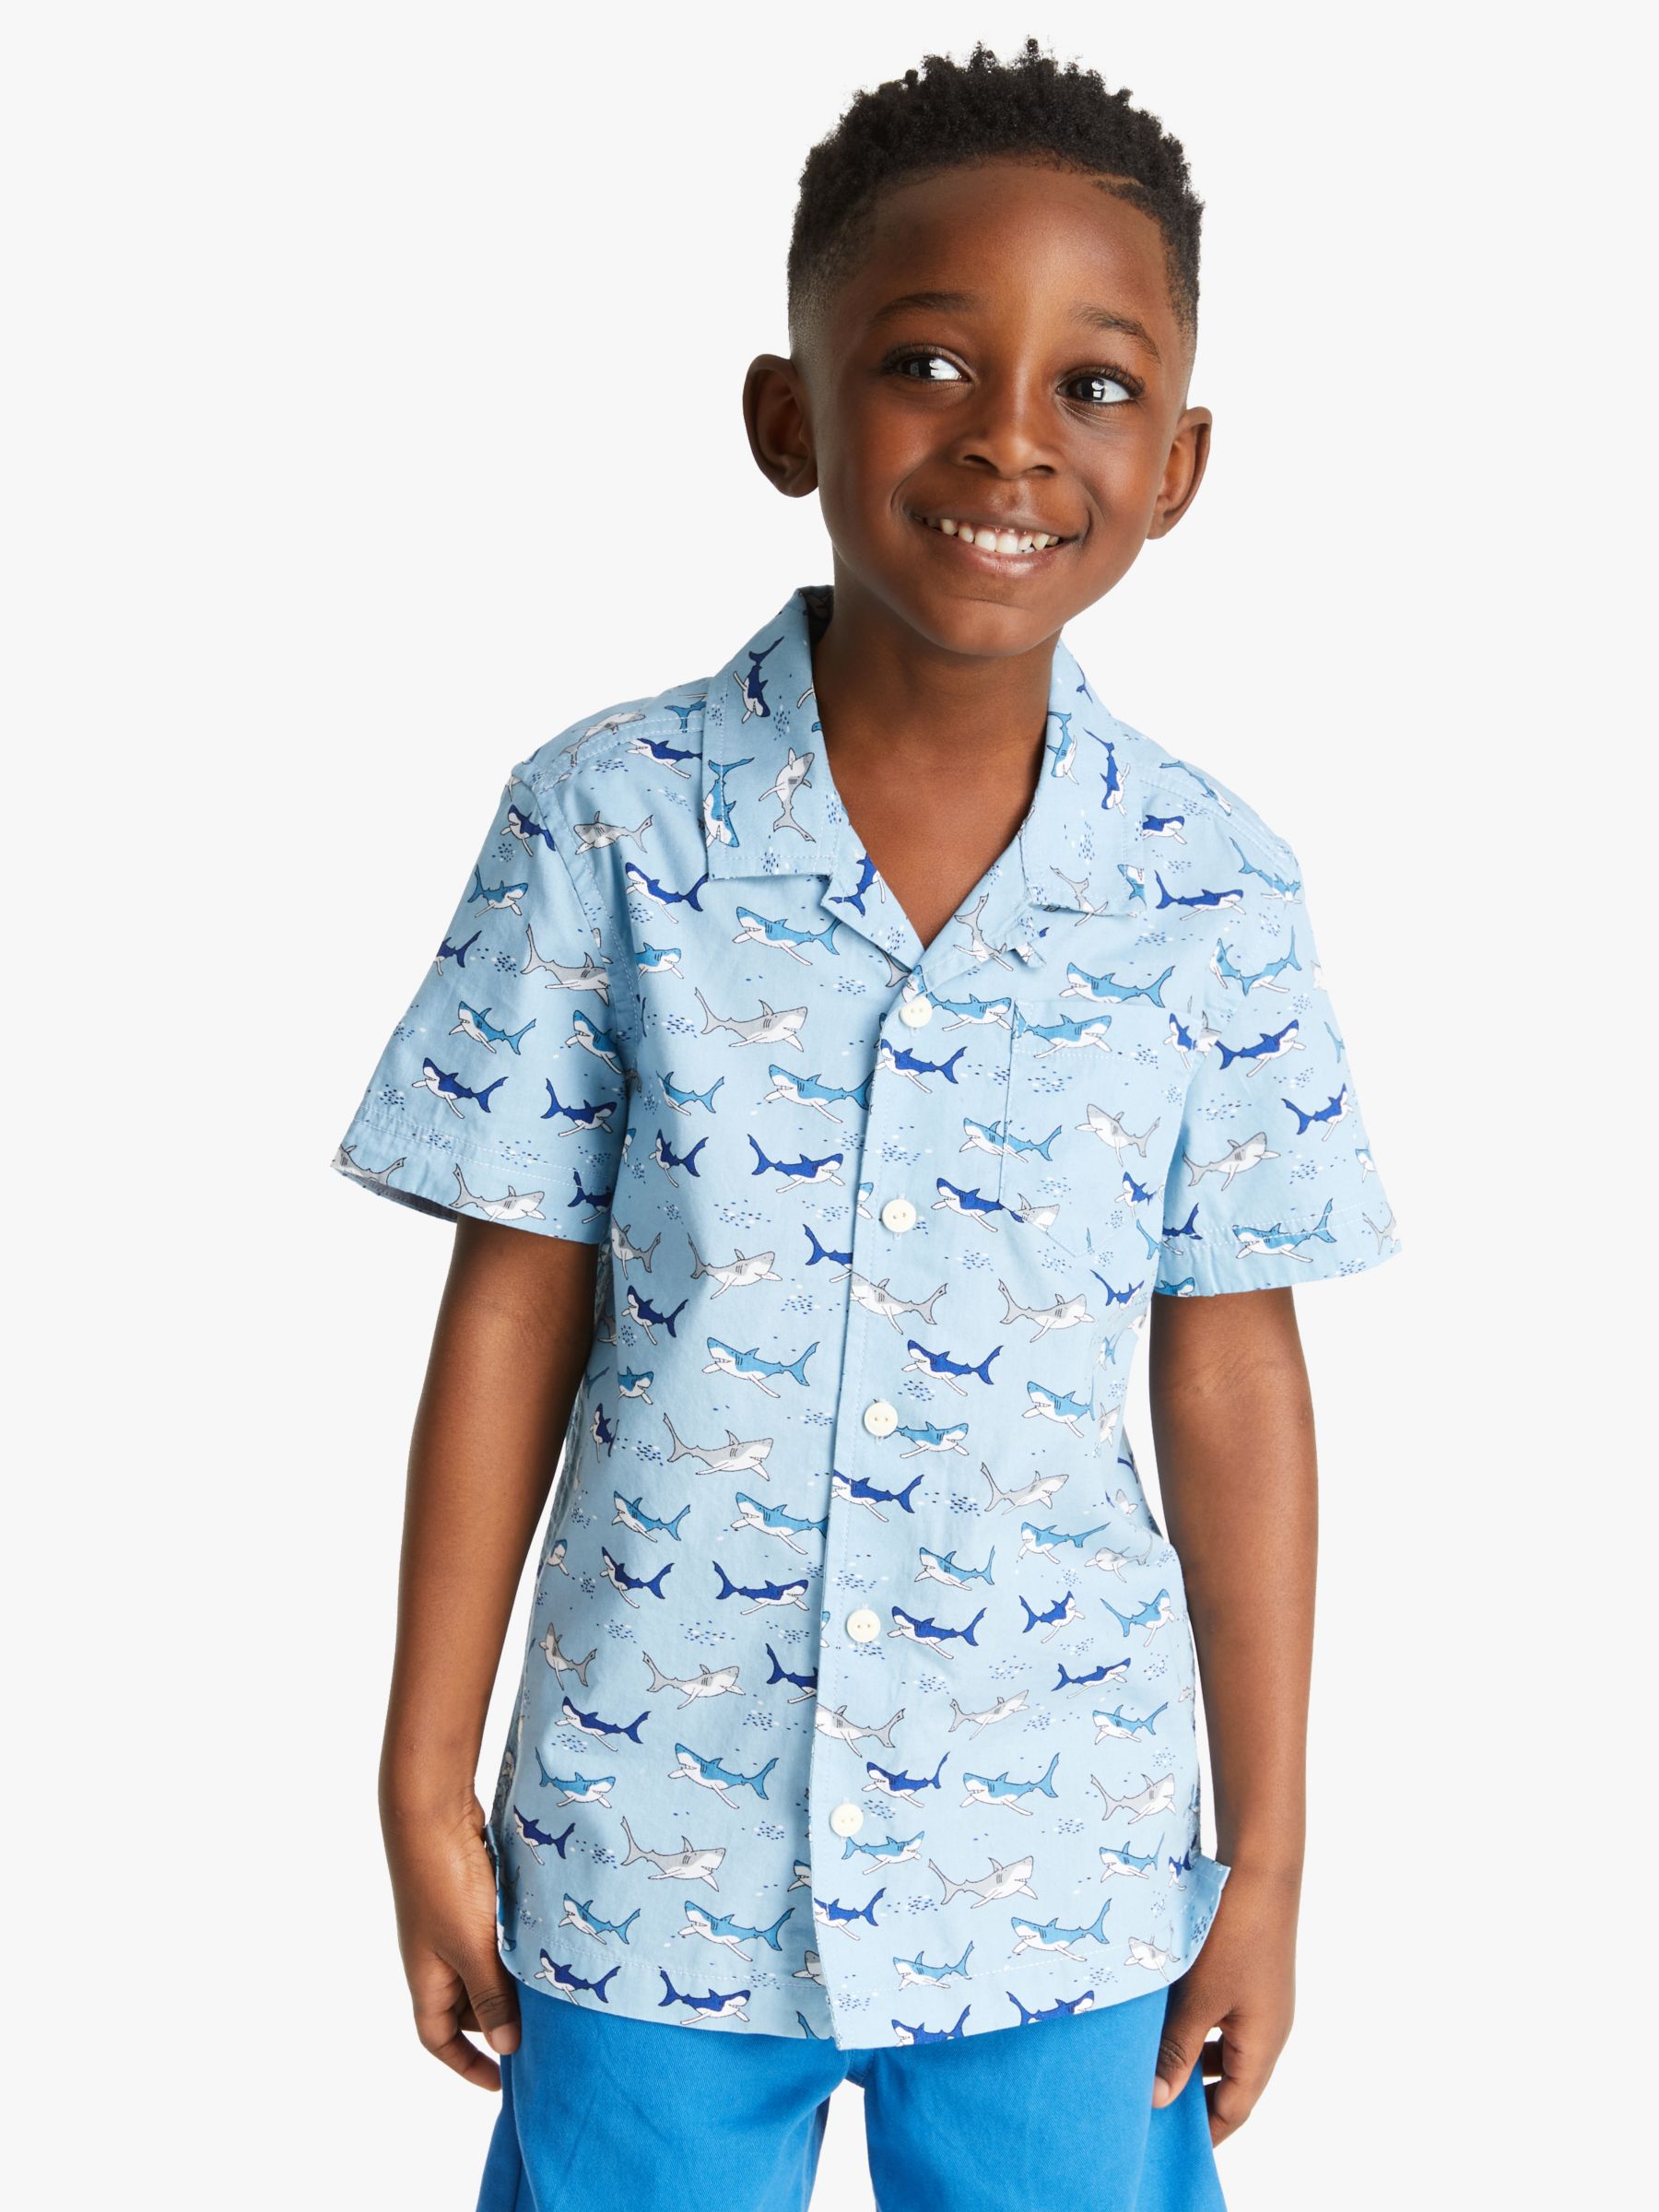 Image of John Lewis and Partners Boys Shark Print Shirt Blue